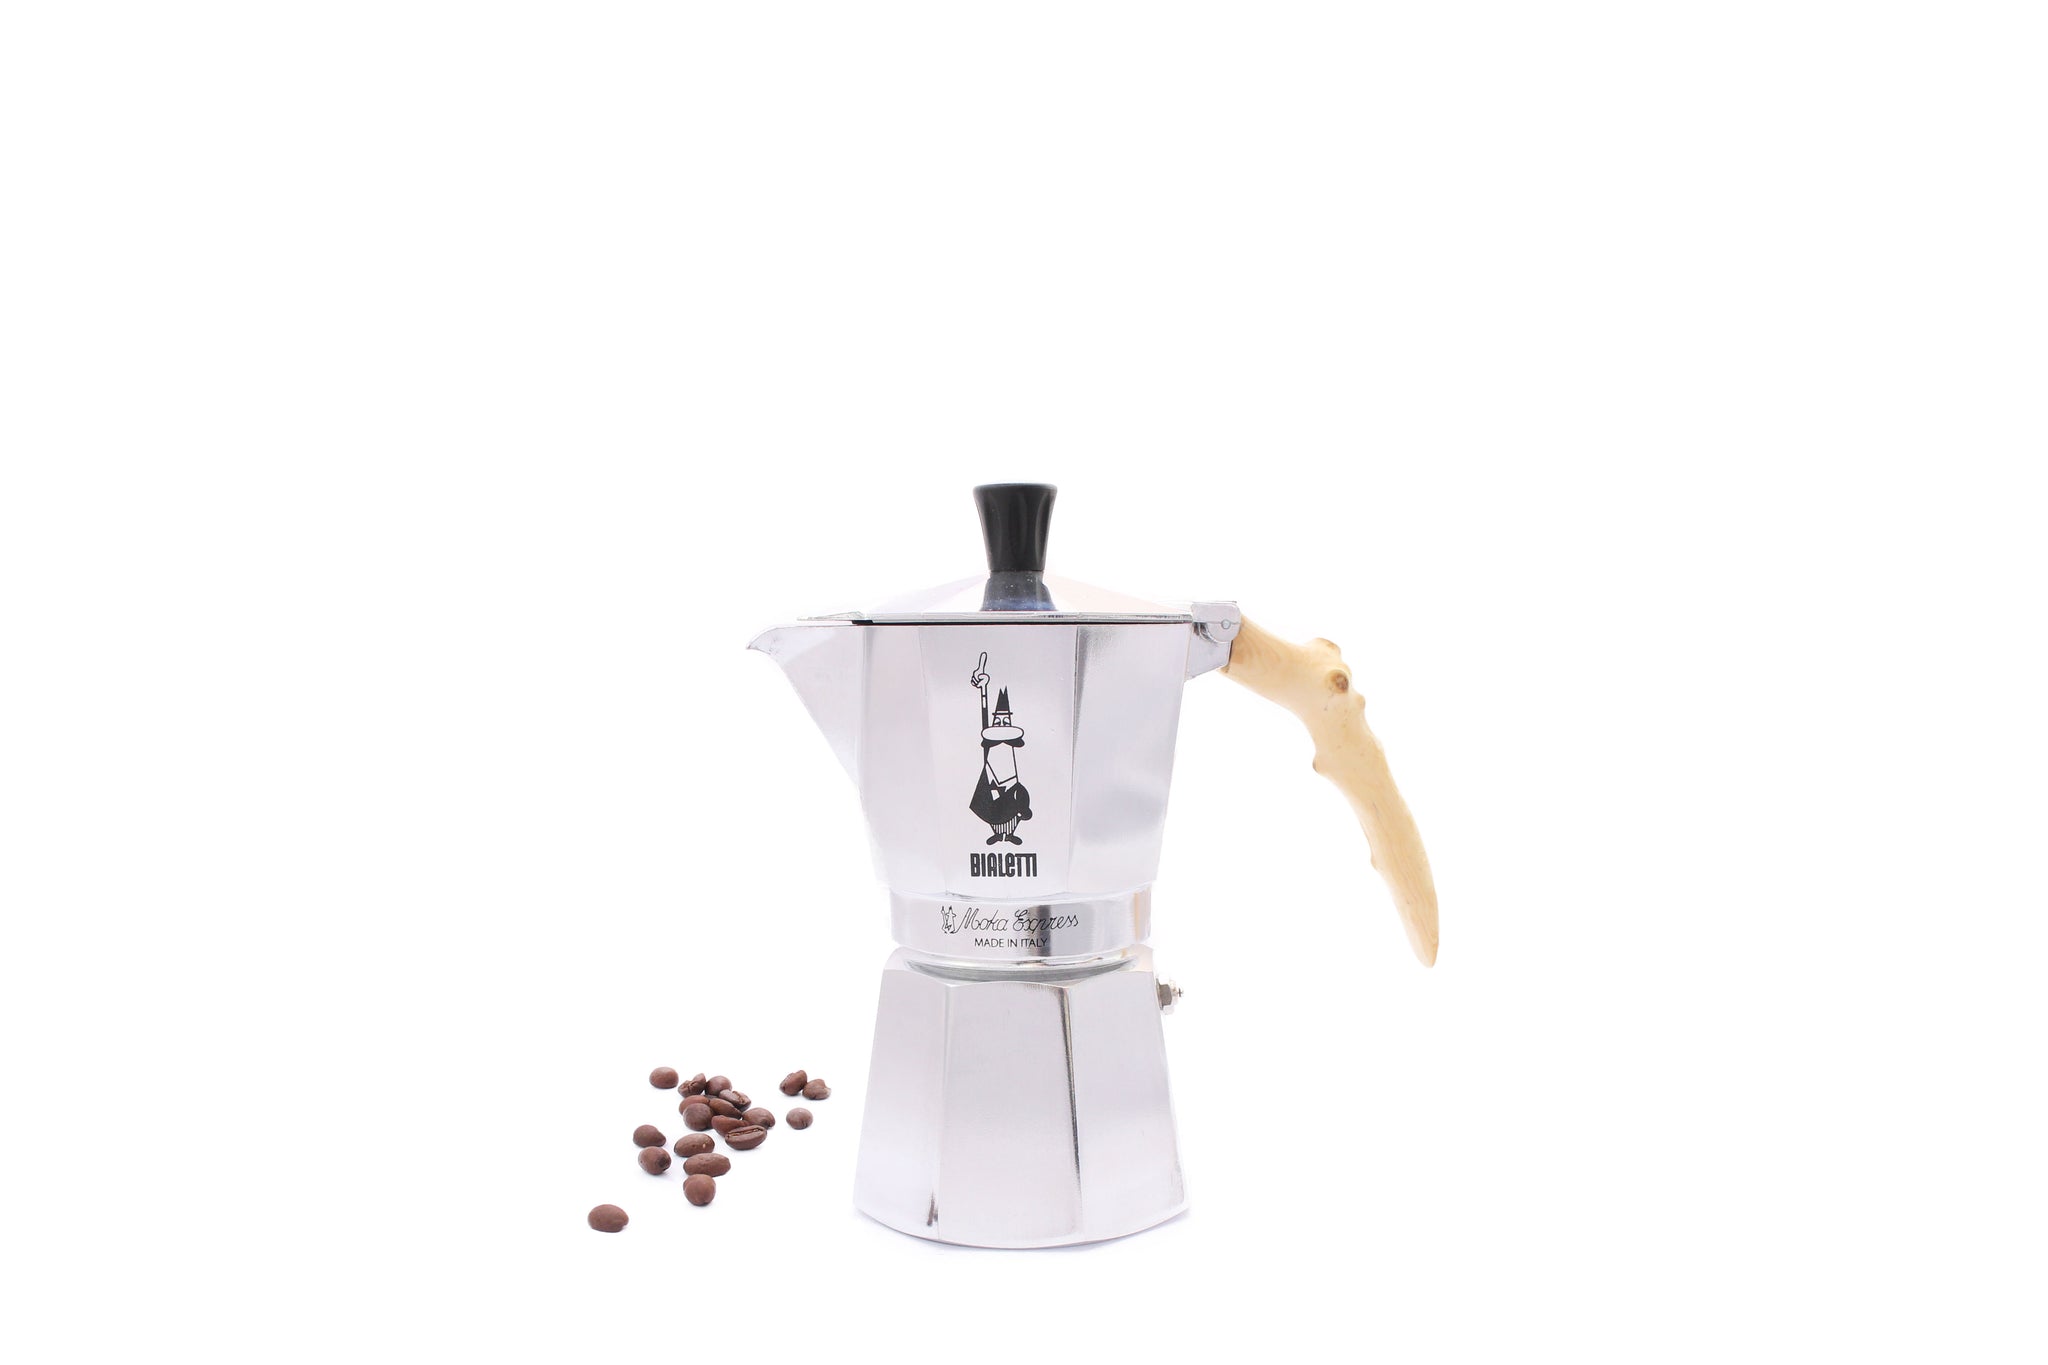 Caffettiera Coffee Machine - one of a kind